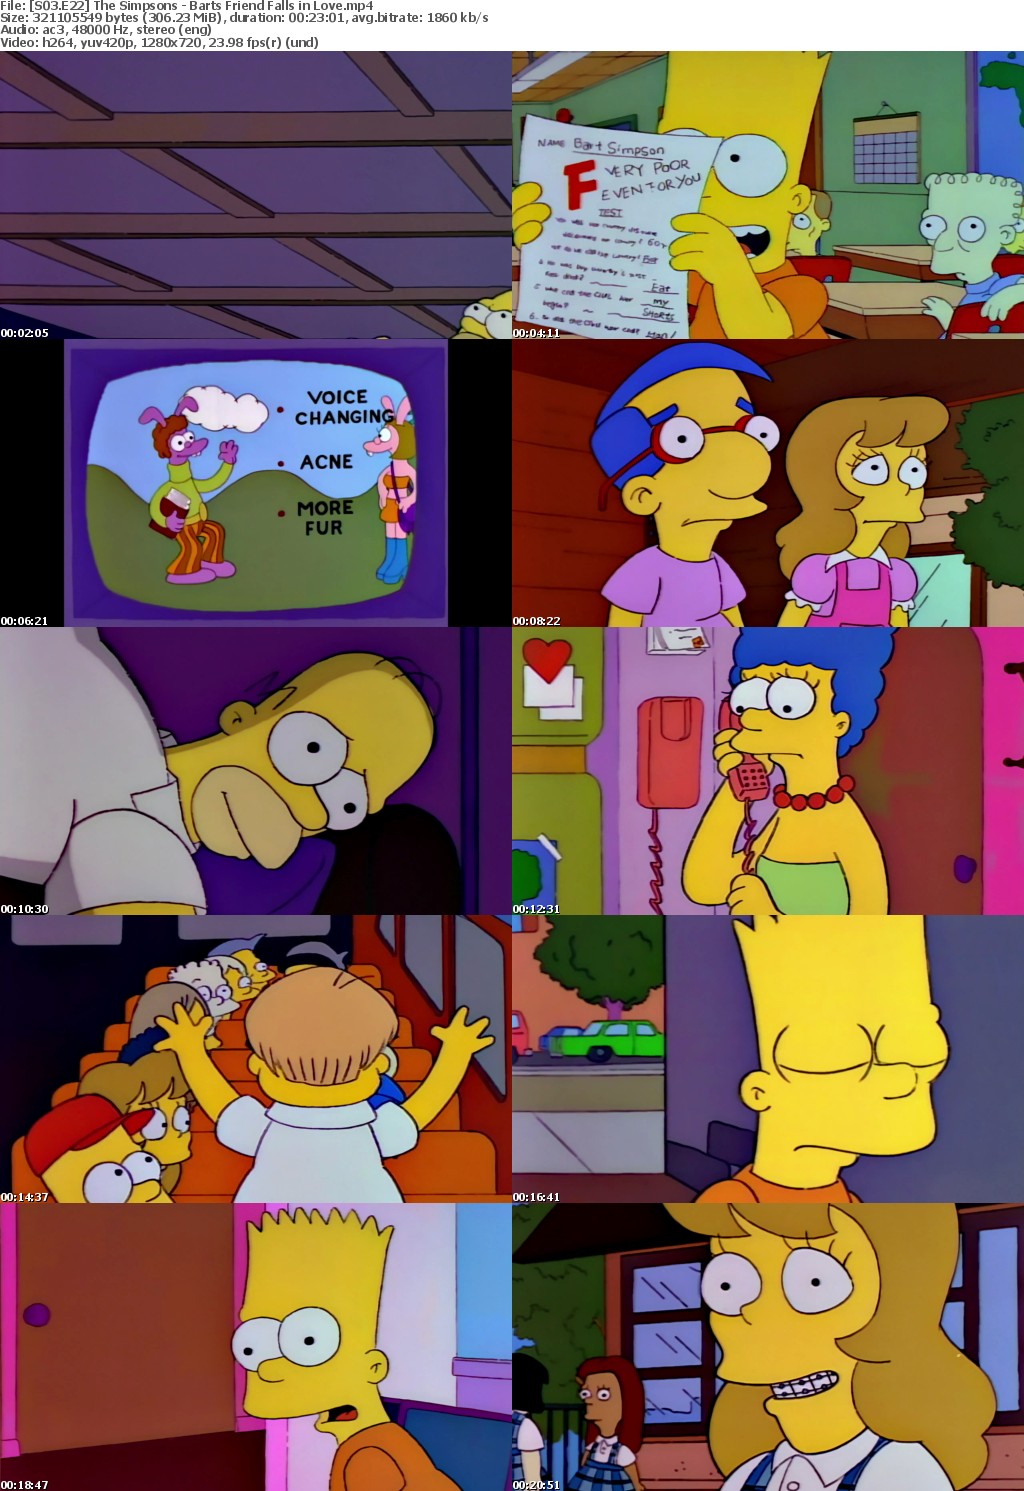 The Simpsons S3 E22 Bart's Friend Falls in Love MP4 720p H264 WEBRip EzzRips